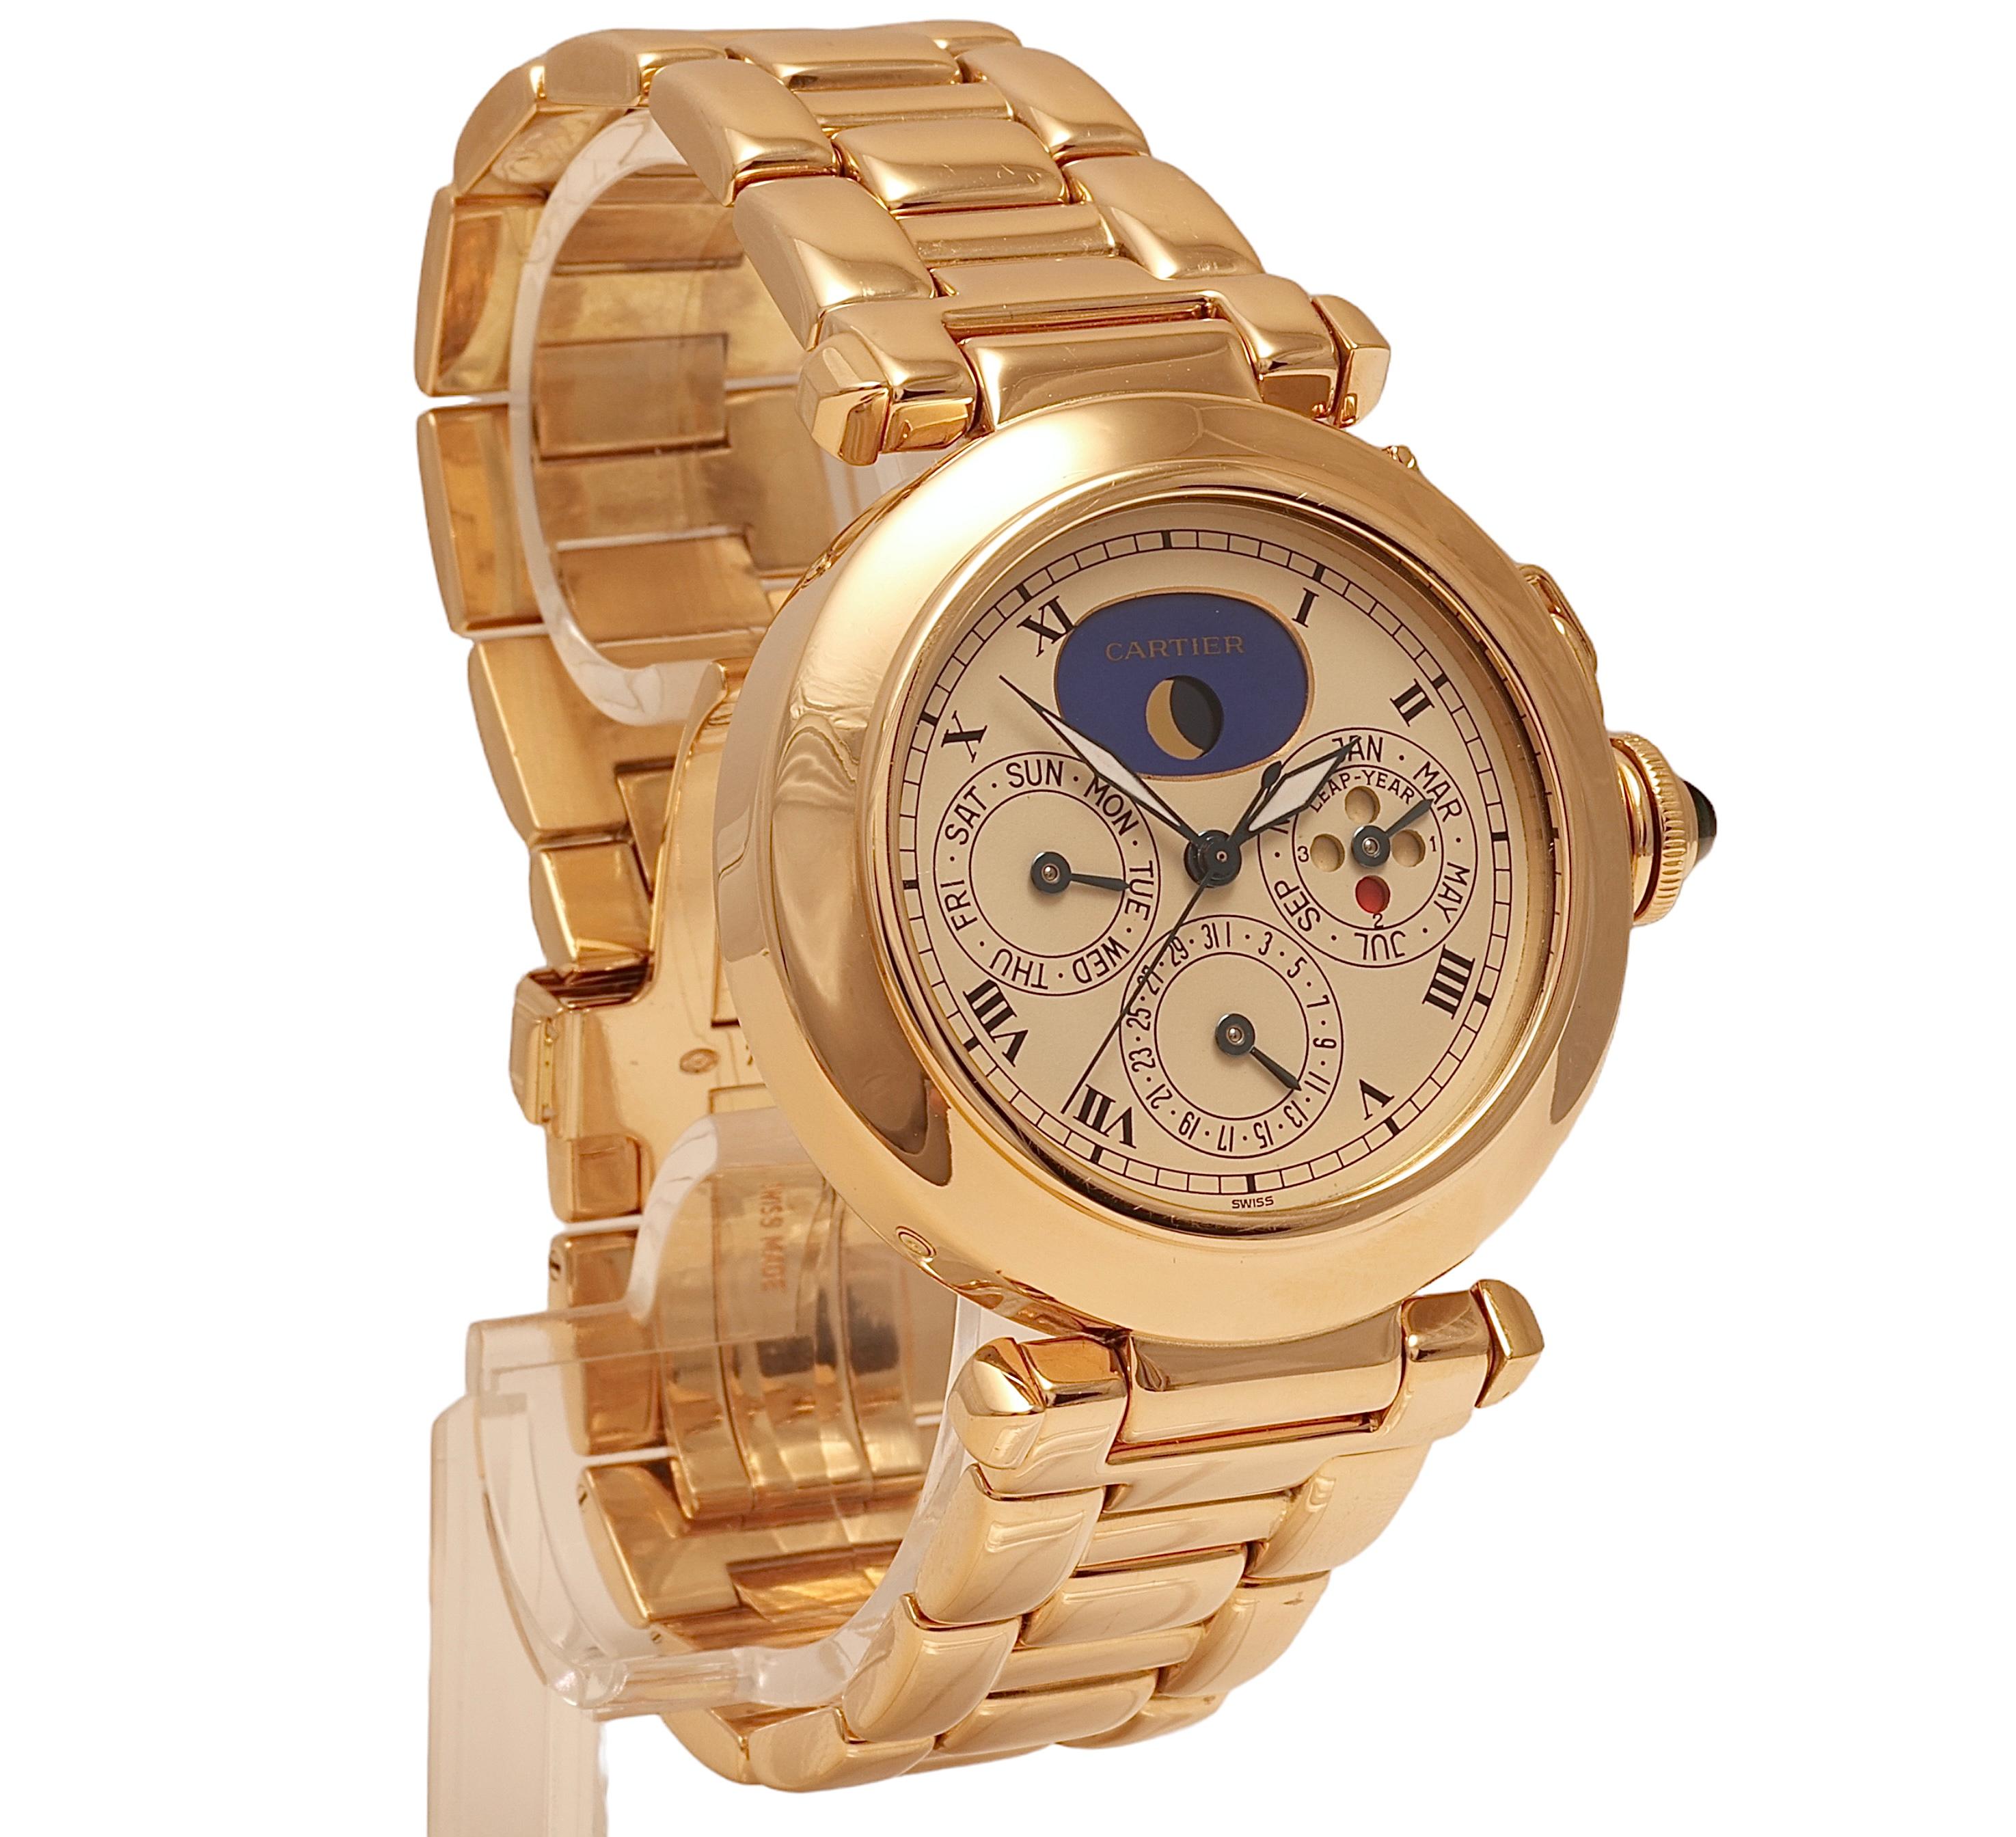 Artisan 18 Kt Cartier Pasha Perpetual Calendar Wrist Watch, Day Date Month Moon Phase